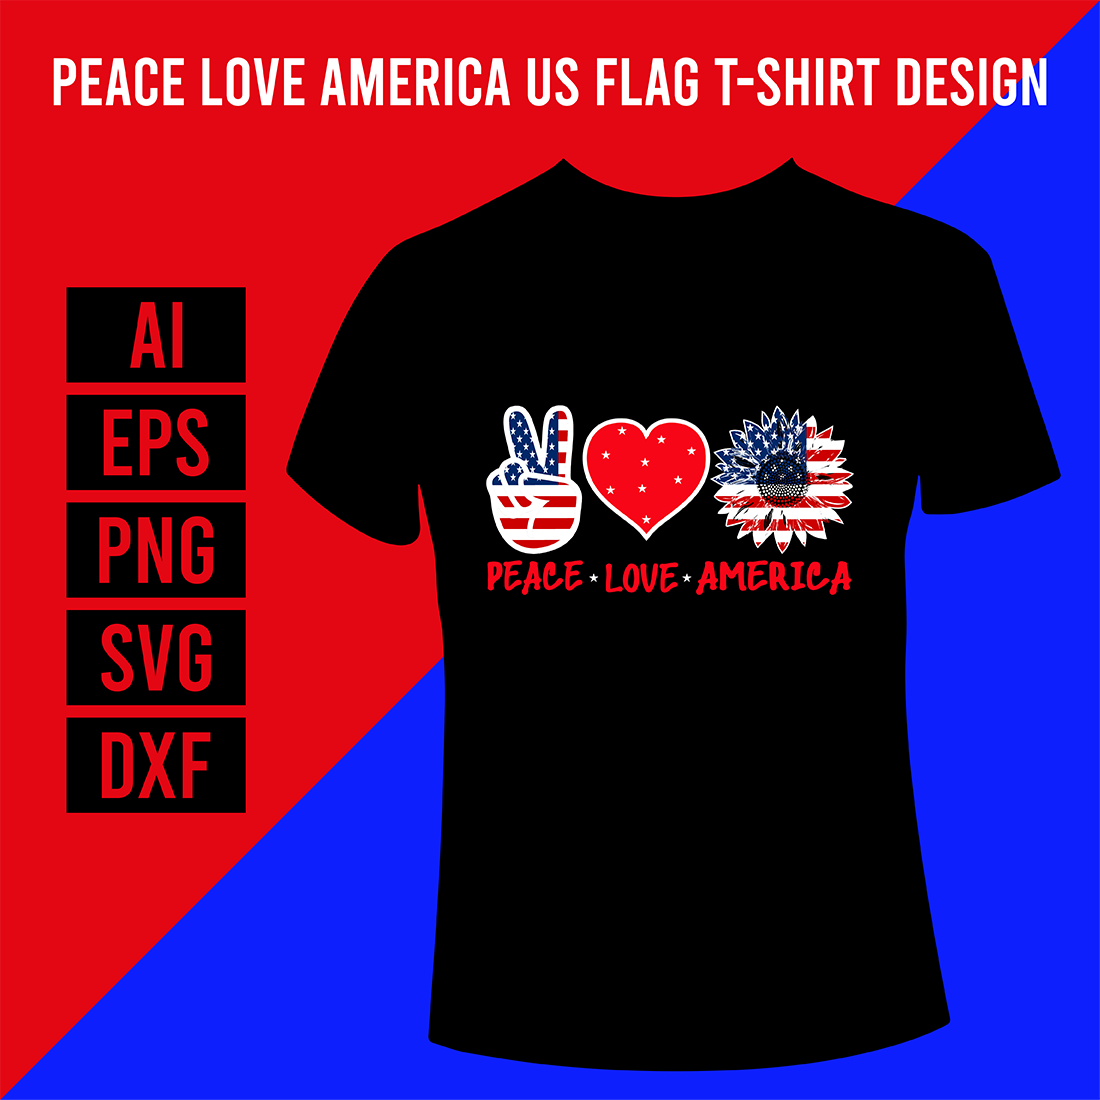 Peace Love America US Flag T-Shirt Design cover image.